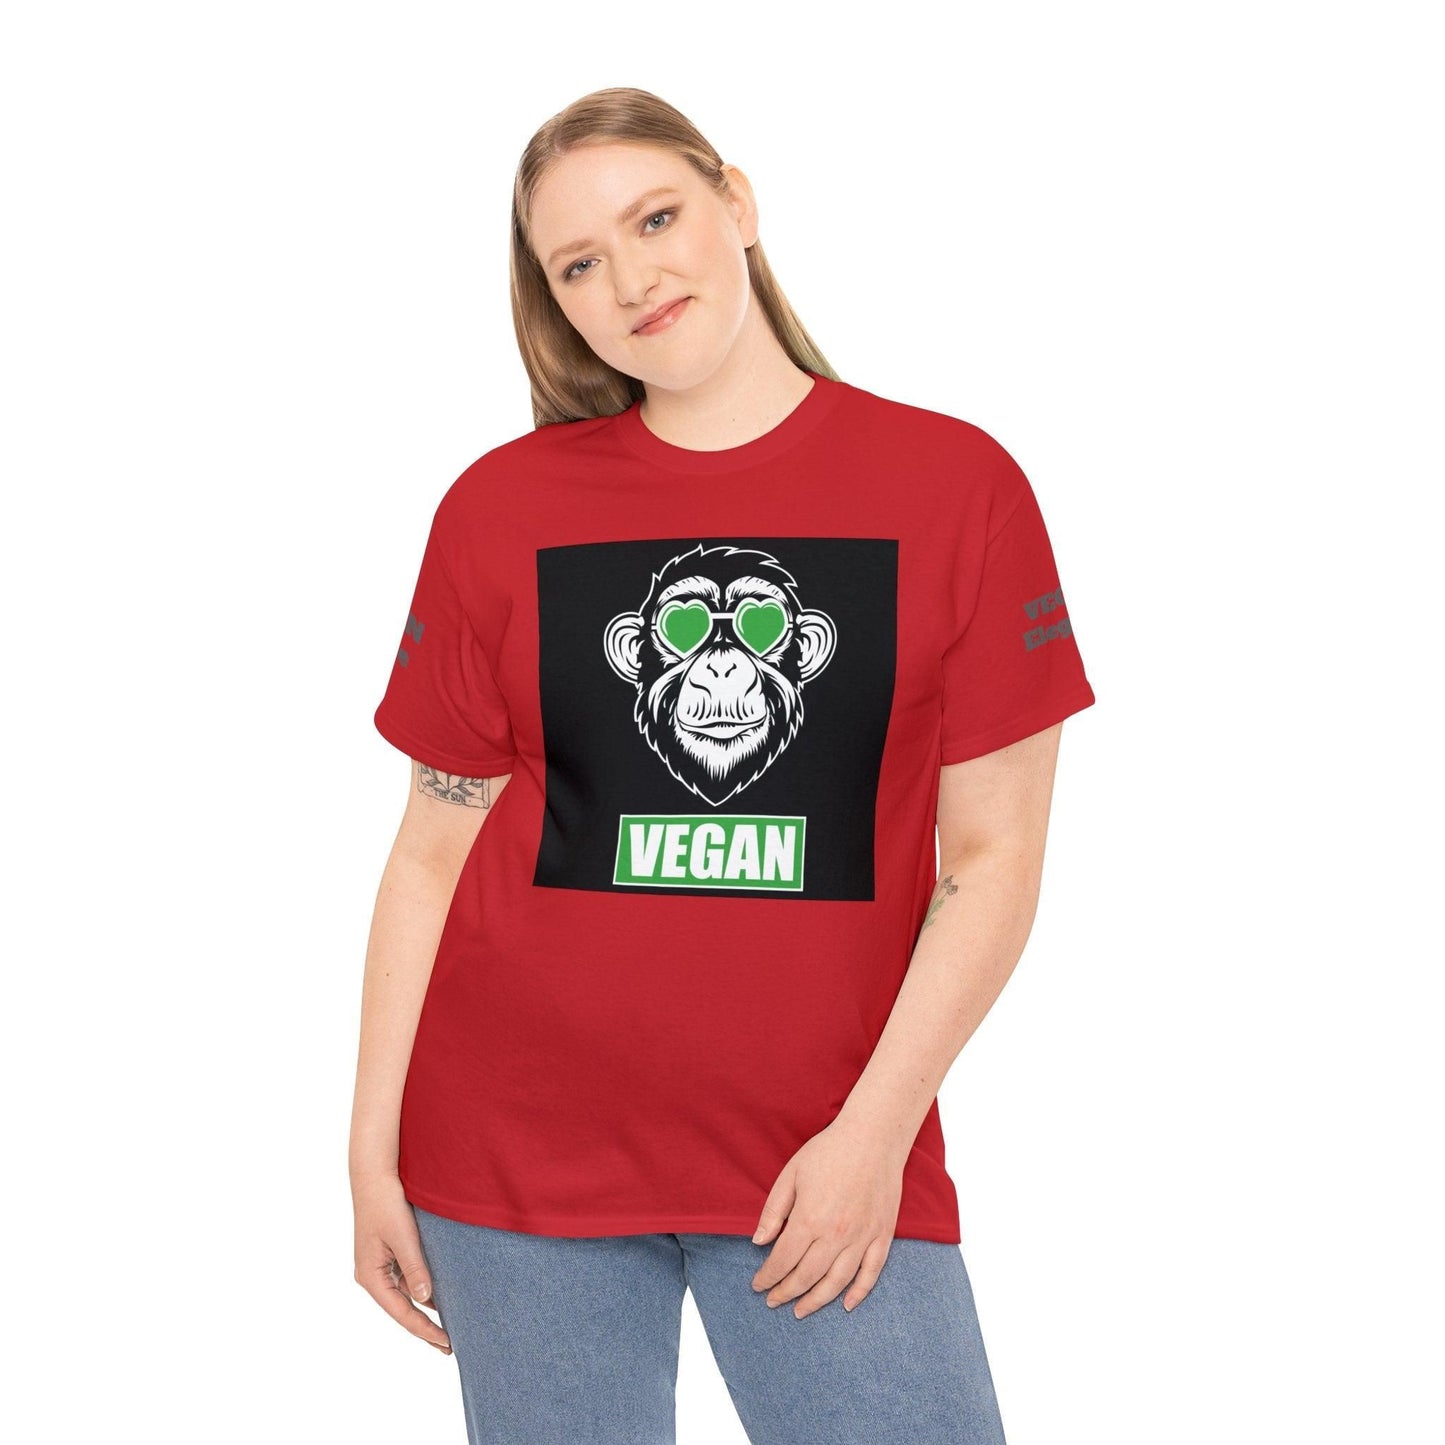 Vegan Premium Unisex Tee T-Shirt Red S 